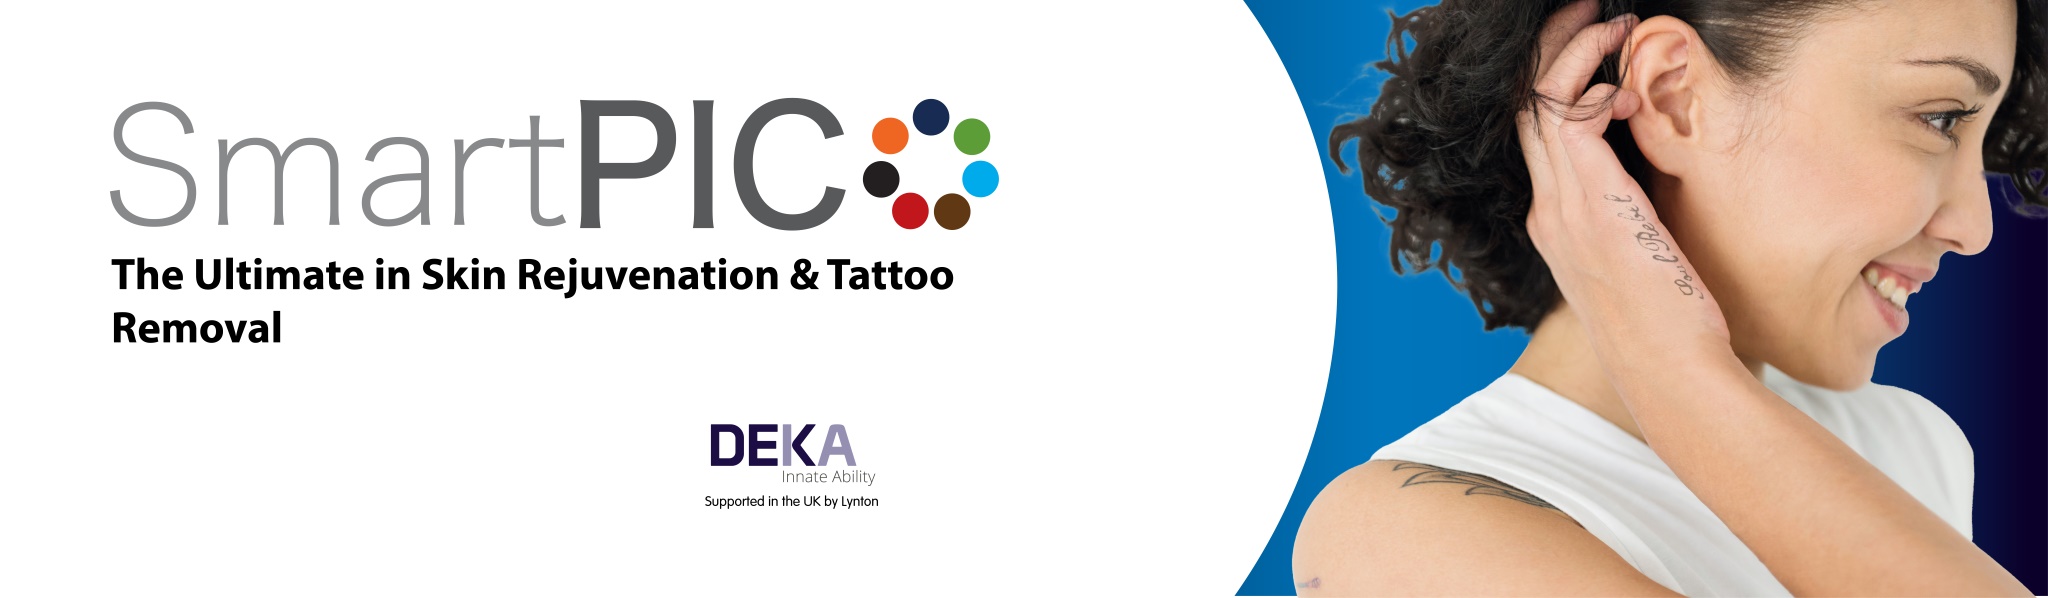 SmartPICO skin ultimate skin rejuvenation and tattoo removal laser by DEKA